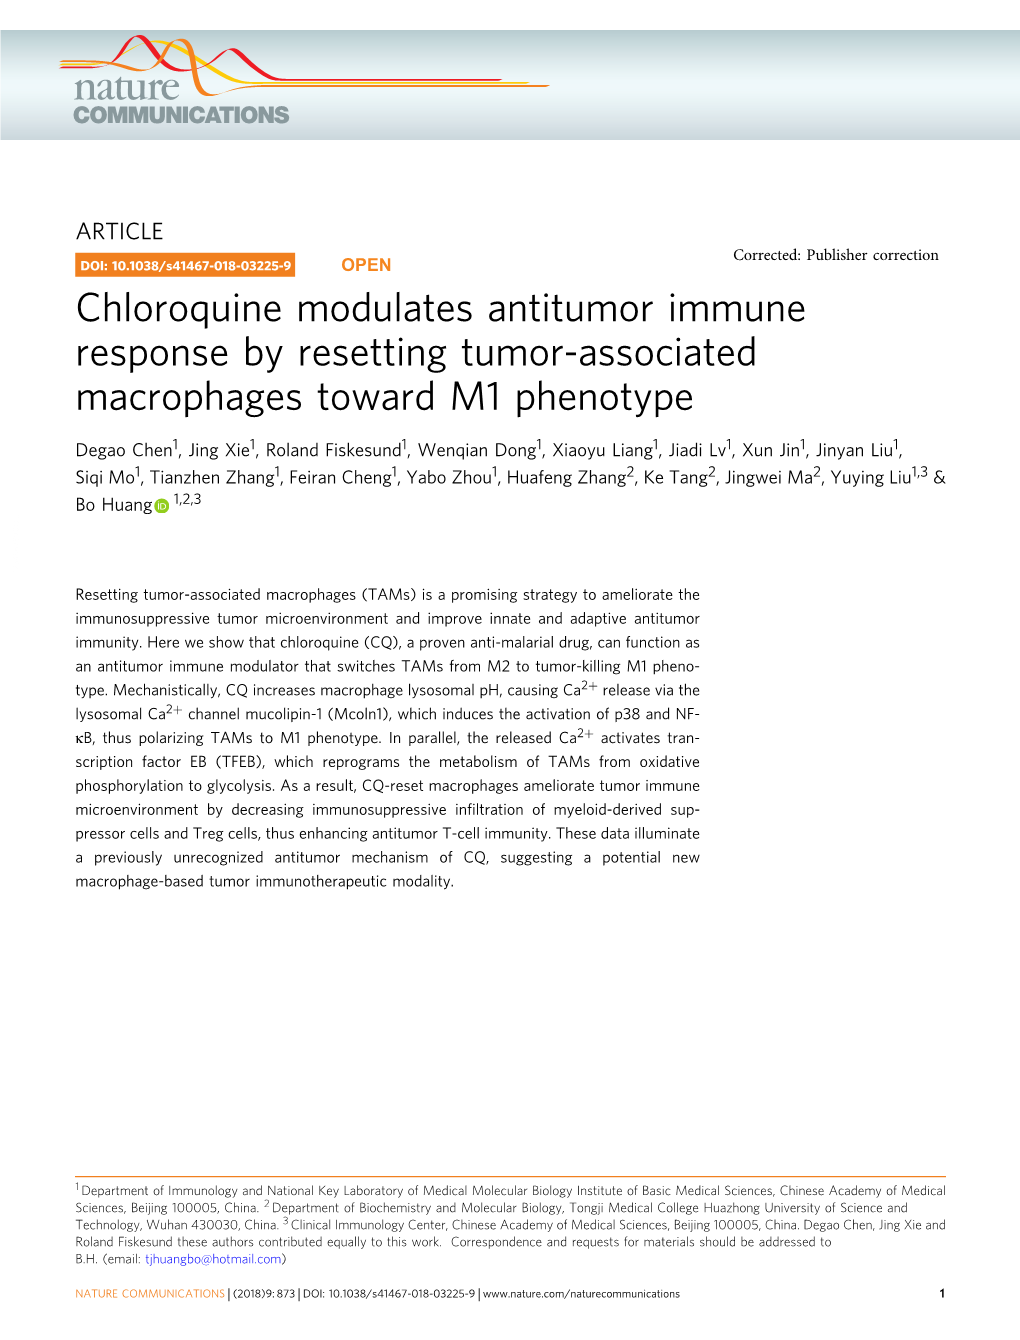 Chloroquine Modulates Antitumor Immune Response by Resetting Tumor-Associated Macrophages Toward M1 Phenotype